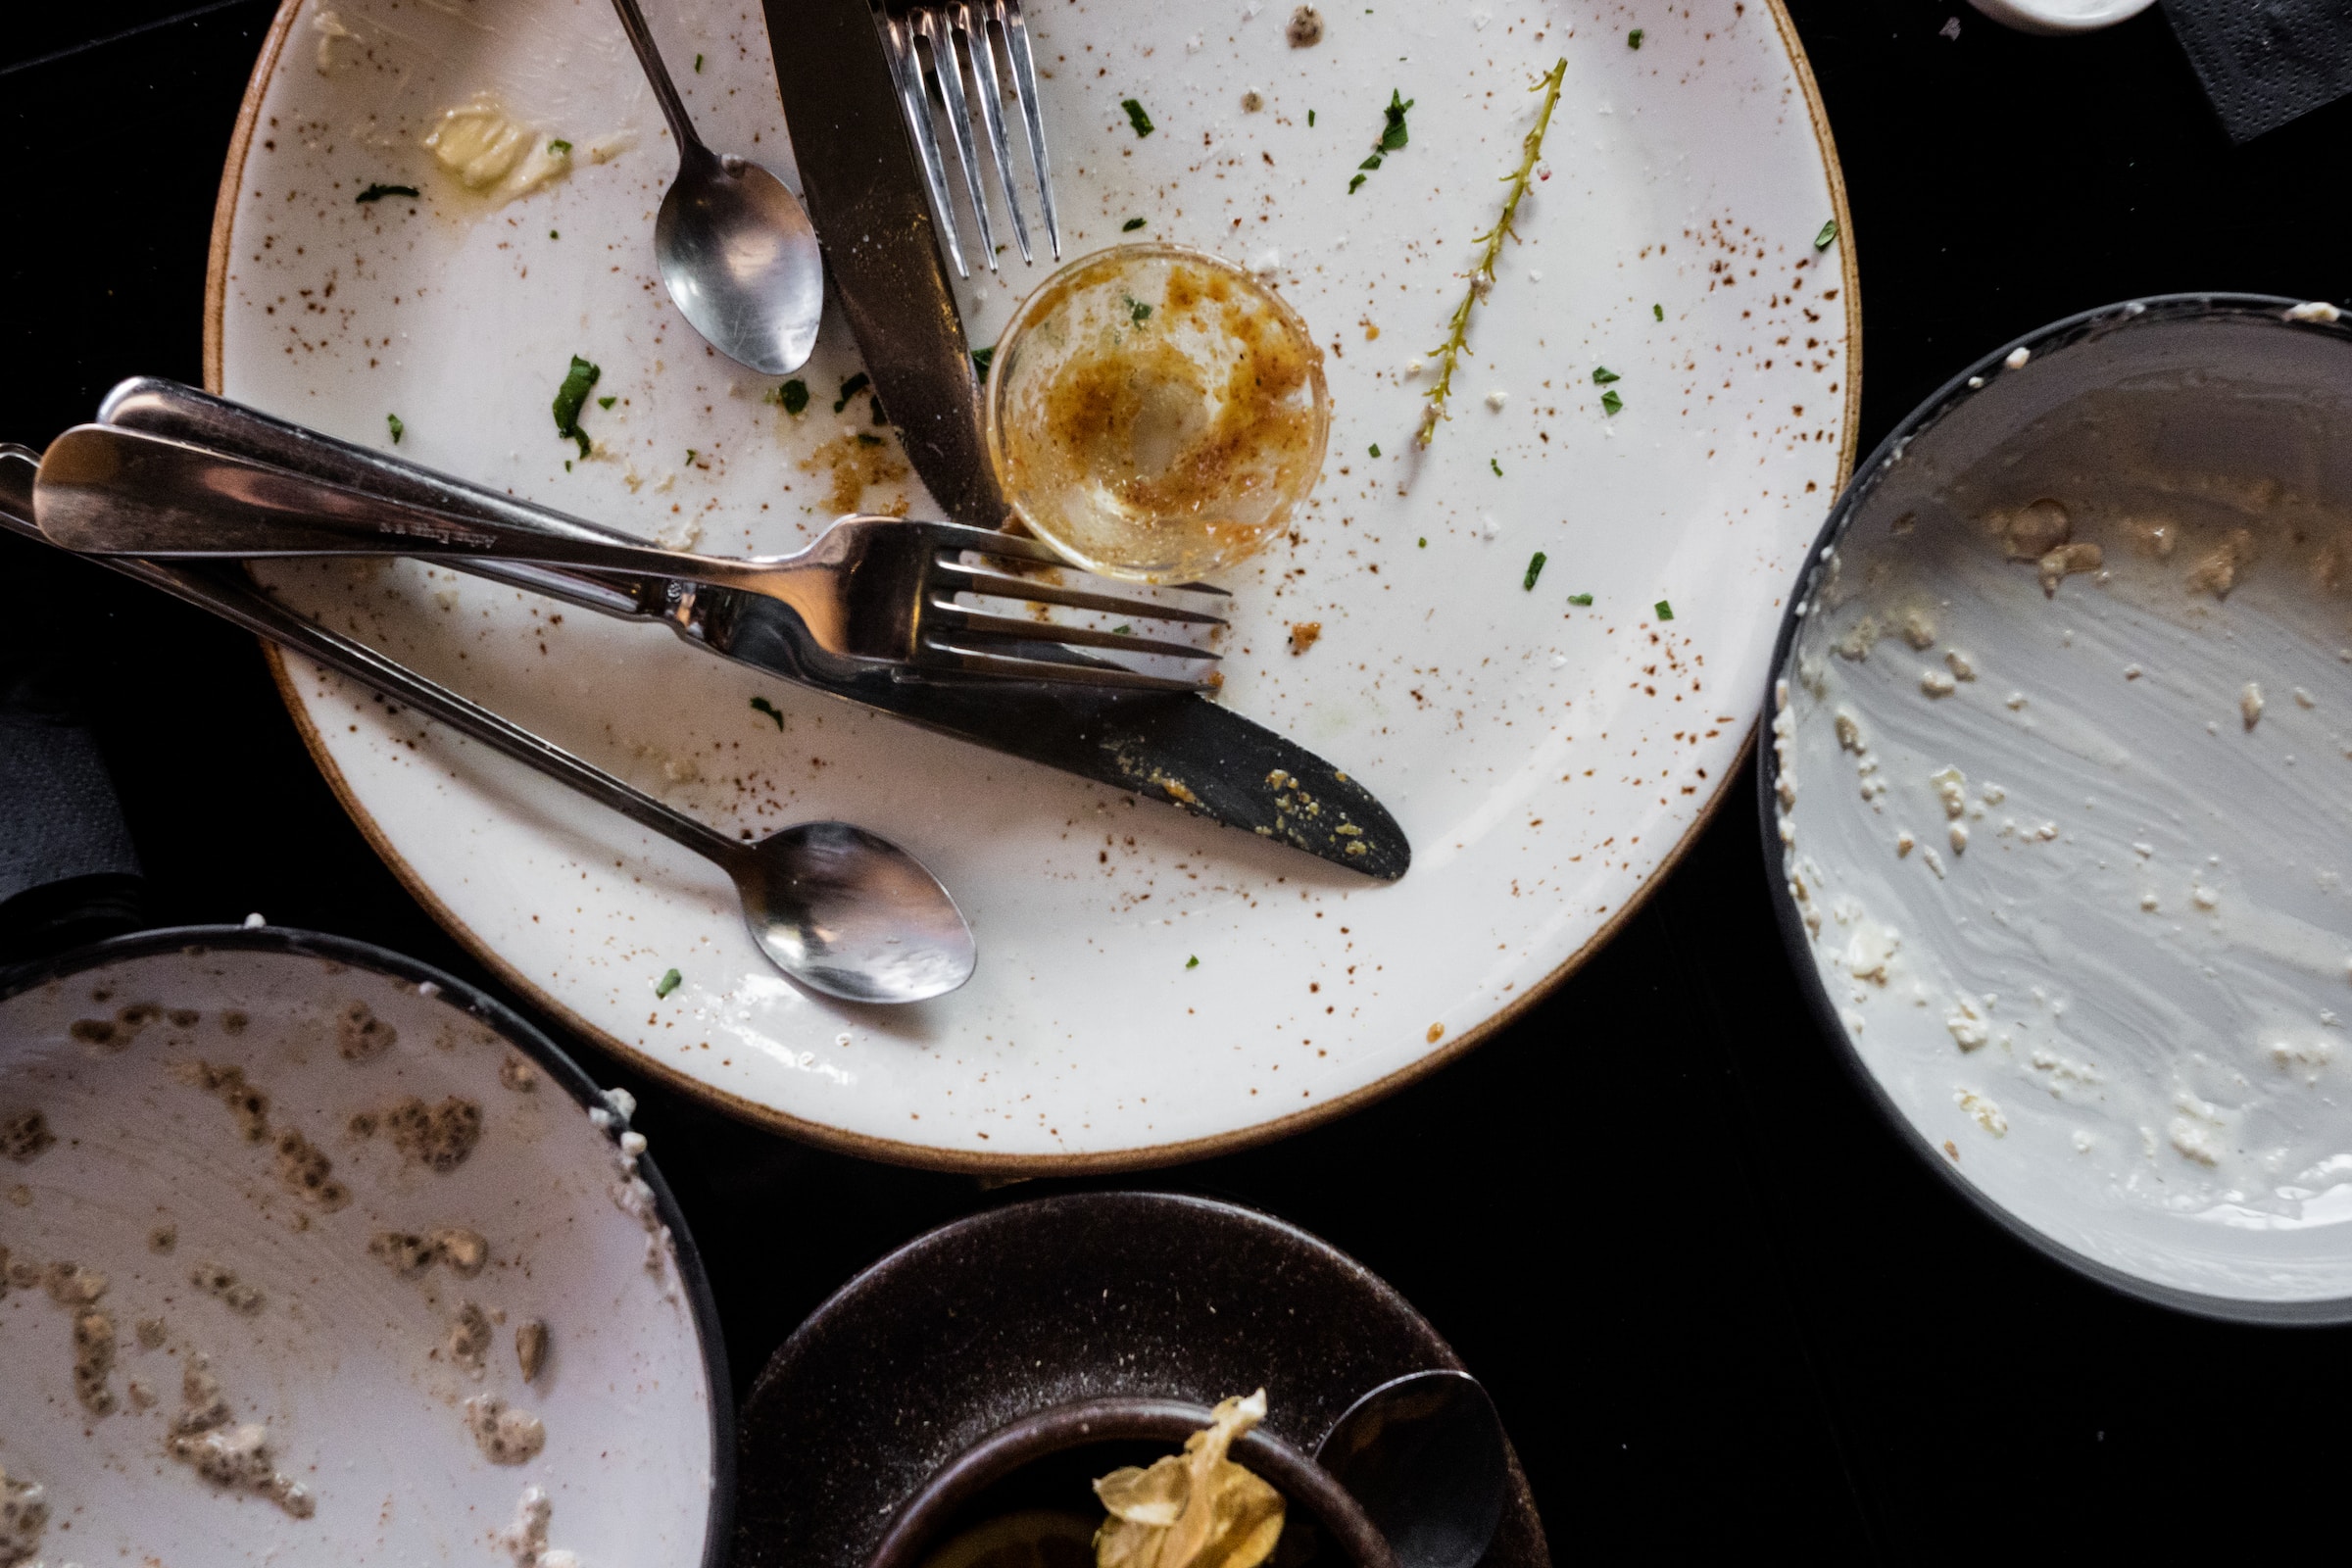 Empty plates at restaurant | Source: Unsplash